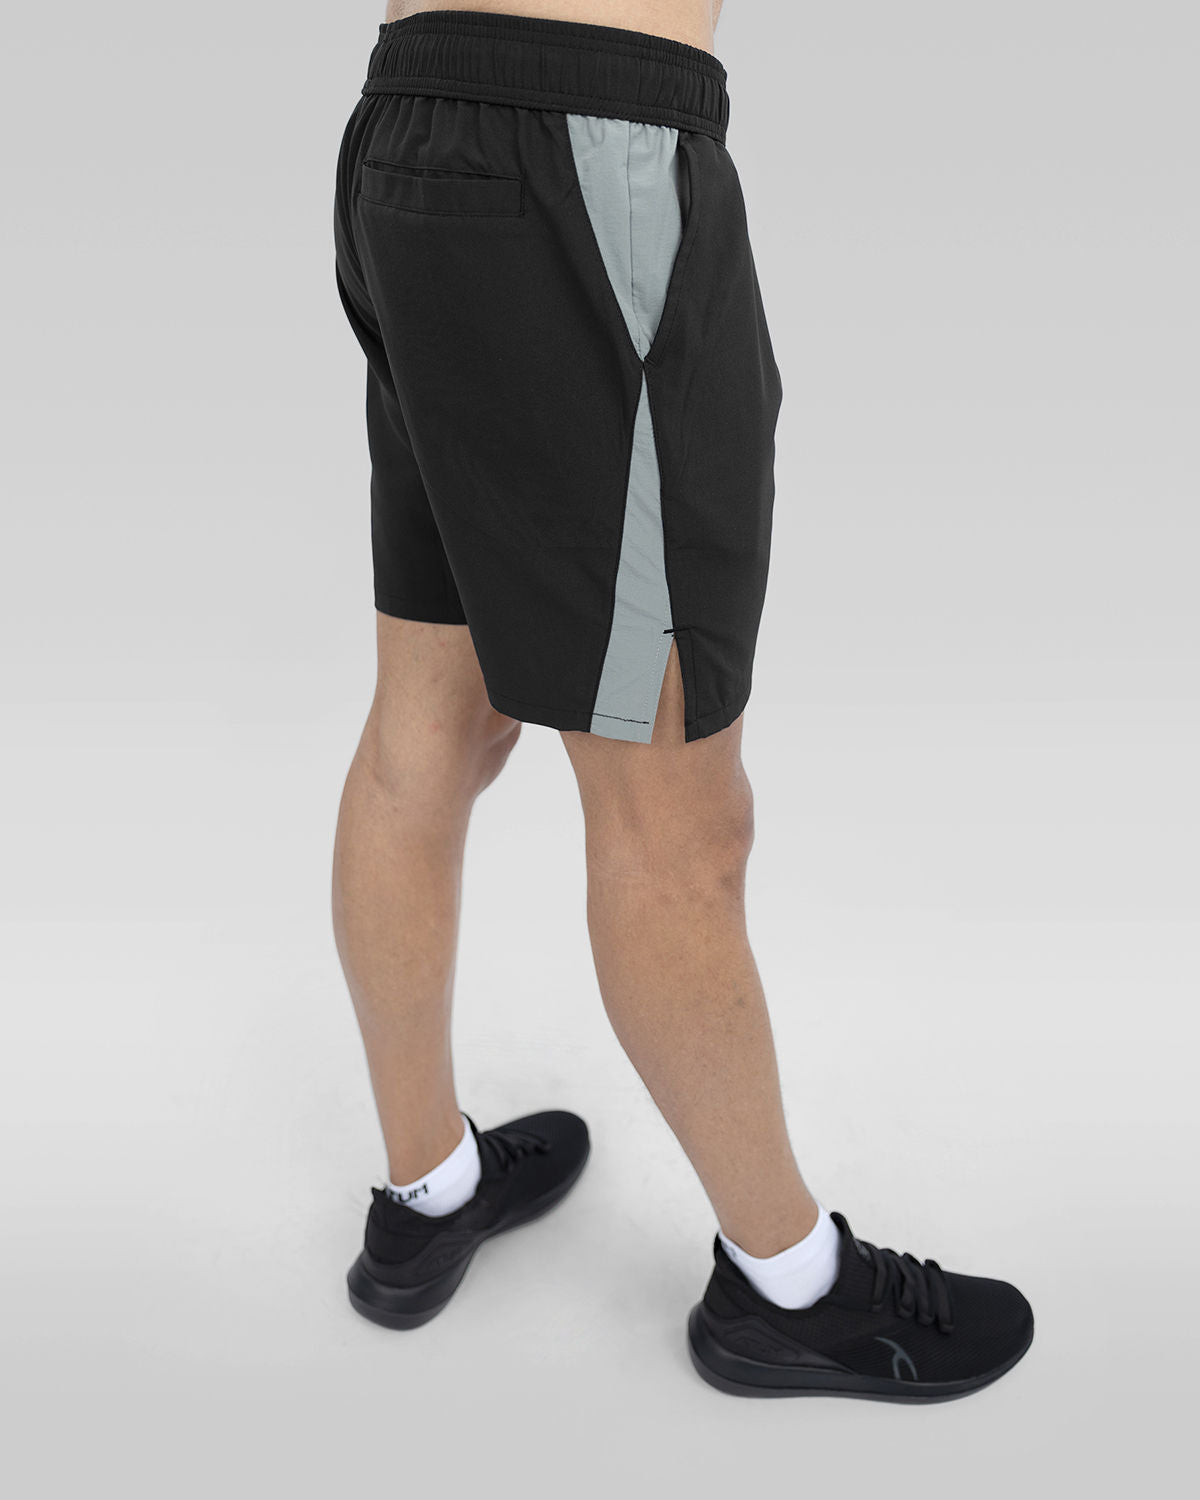 Atum men's Dust power shorts